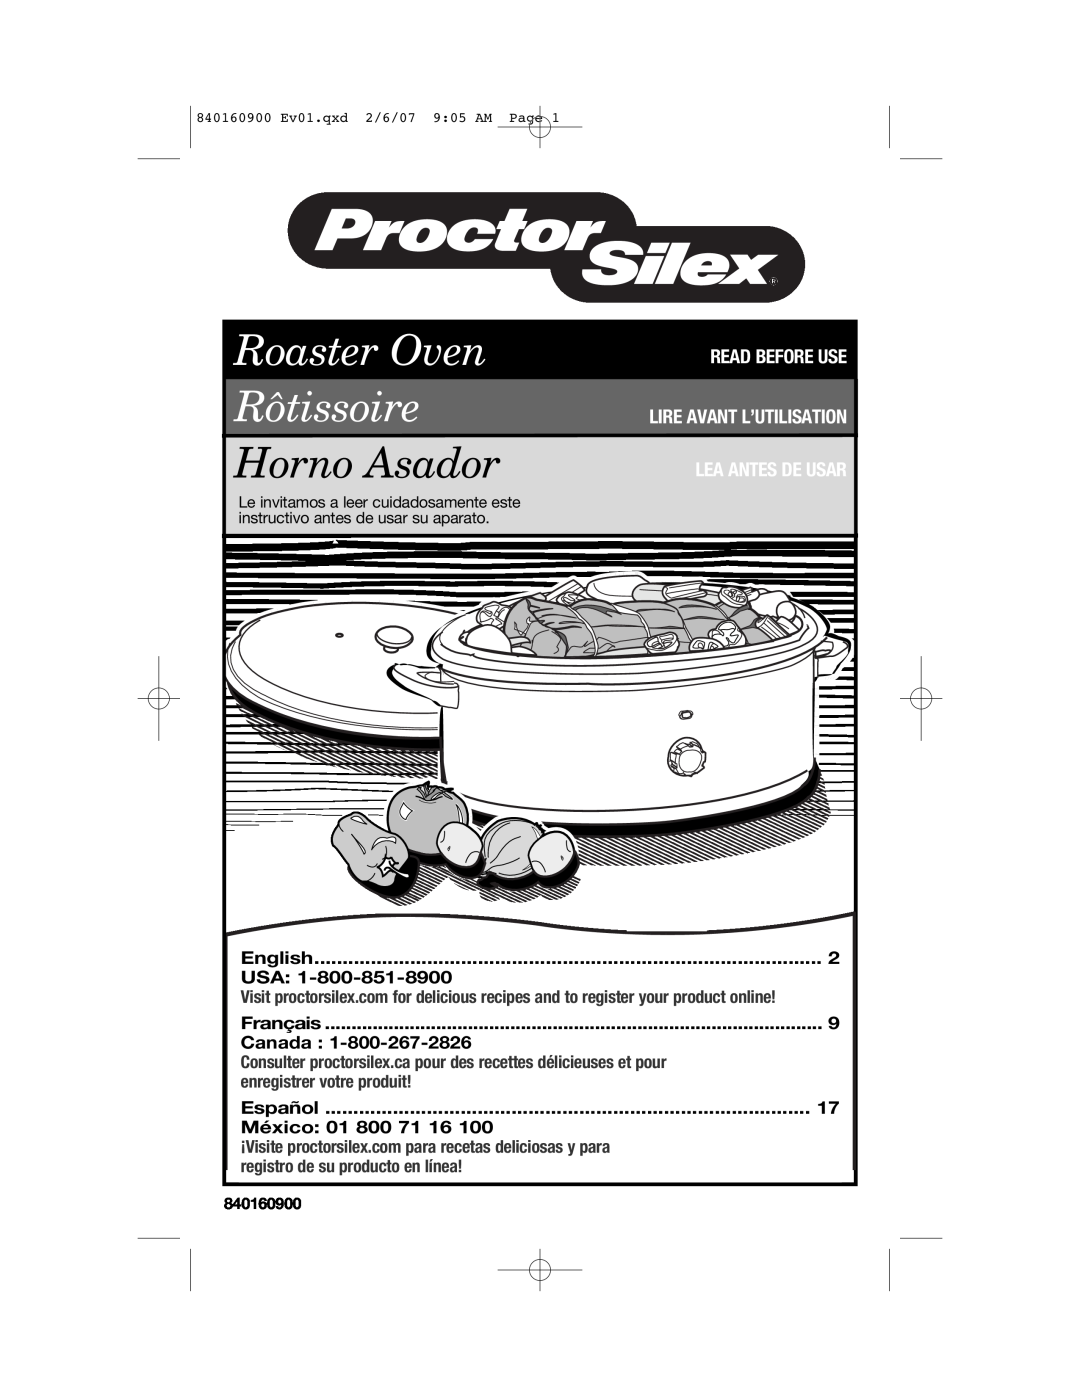 Proctor-Silex 840160900 manual English, Français, Canada, Español, México 01 800 71 16, Roaster Oven Rôtissoire 